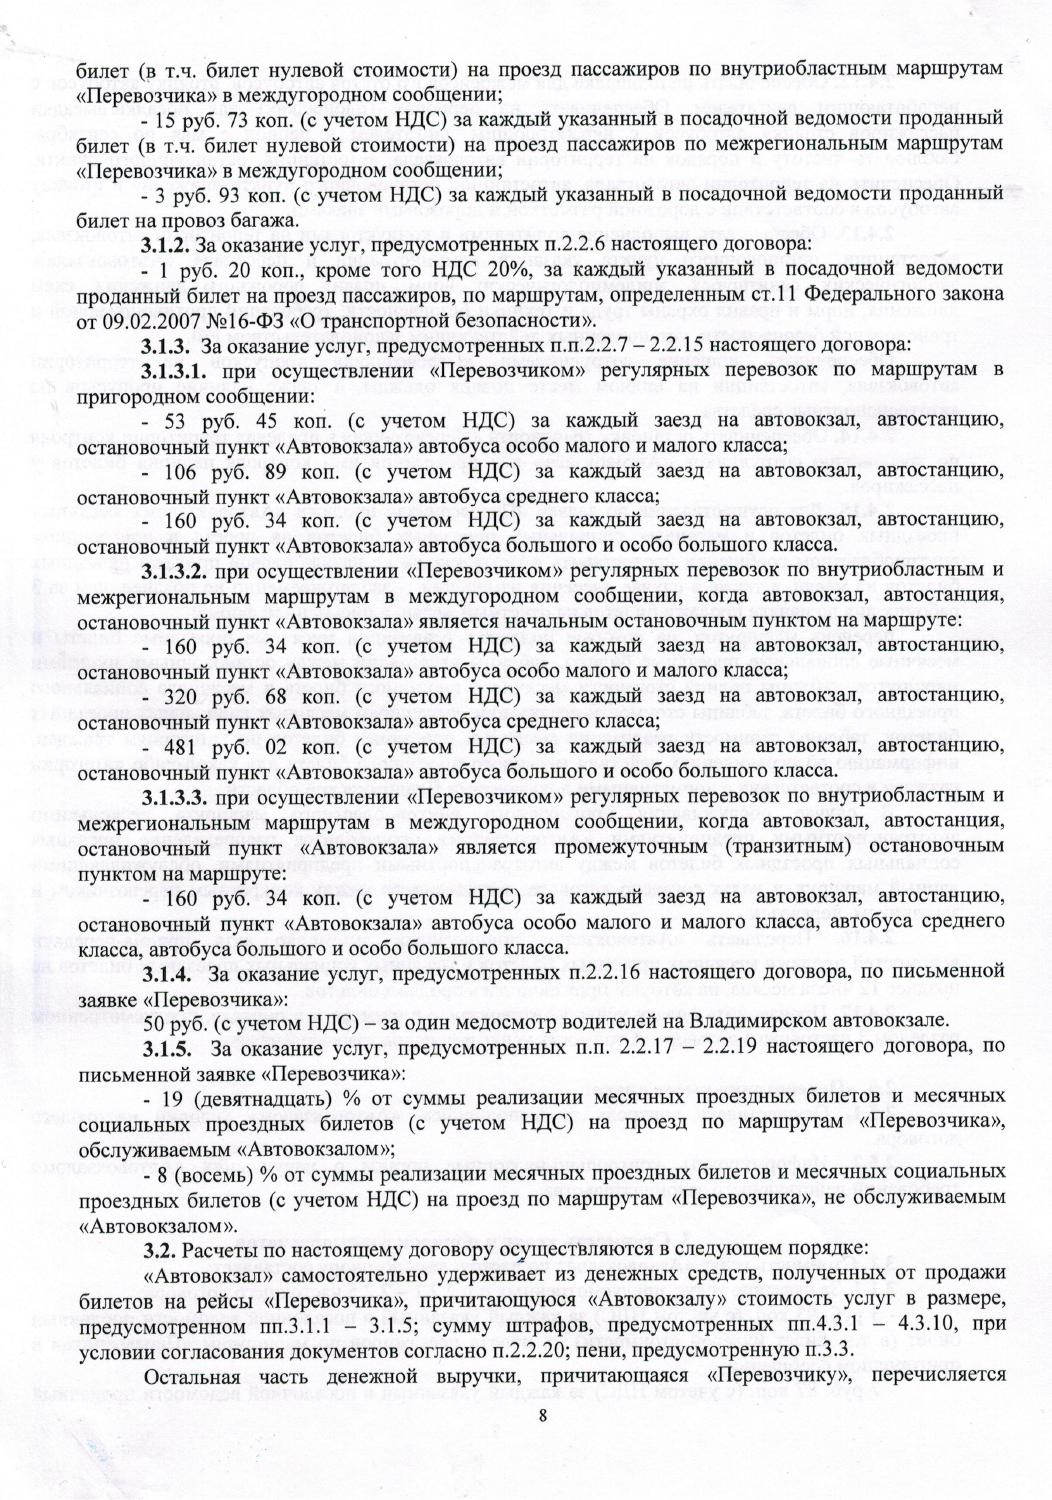 Договор ГУП владимиский вокзал-8.jpg